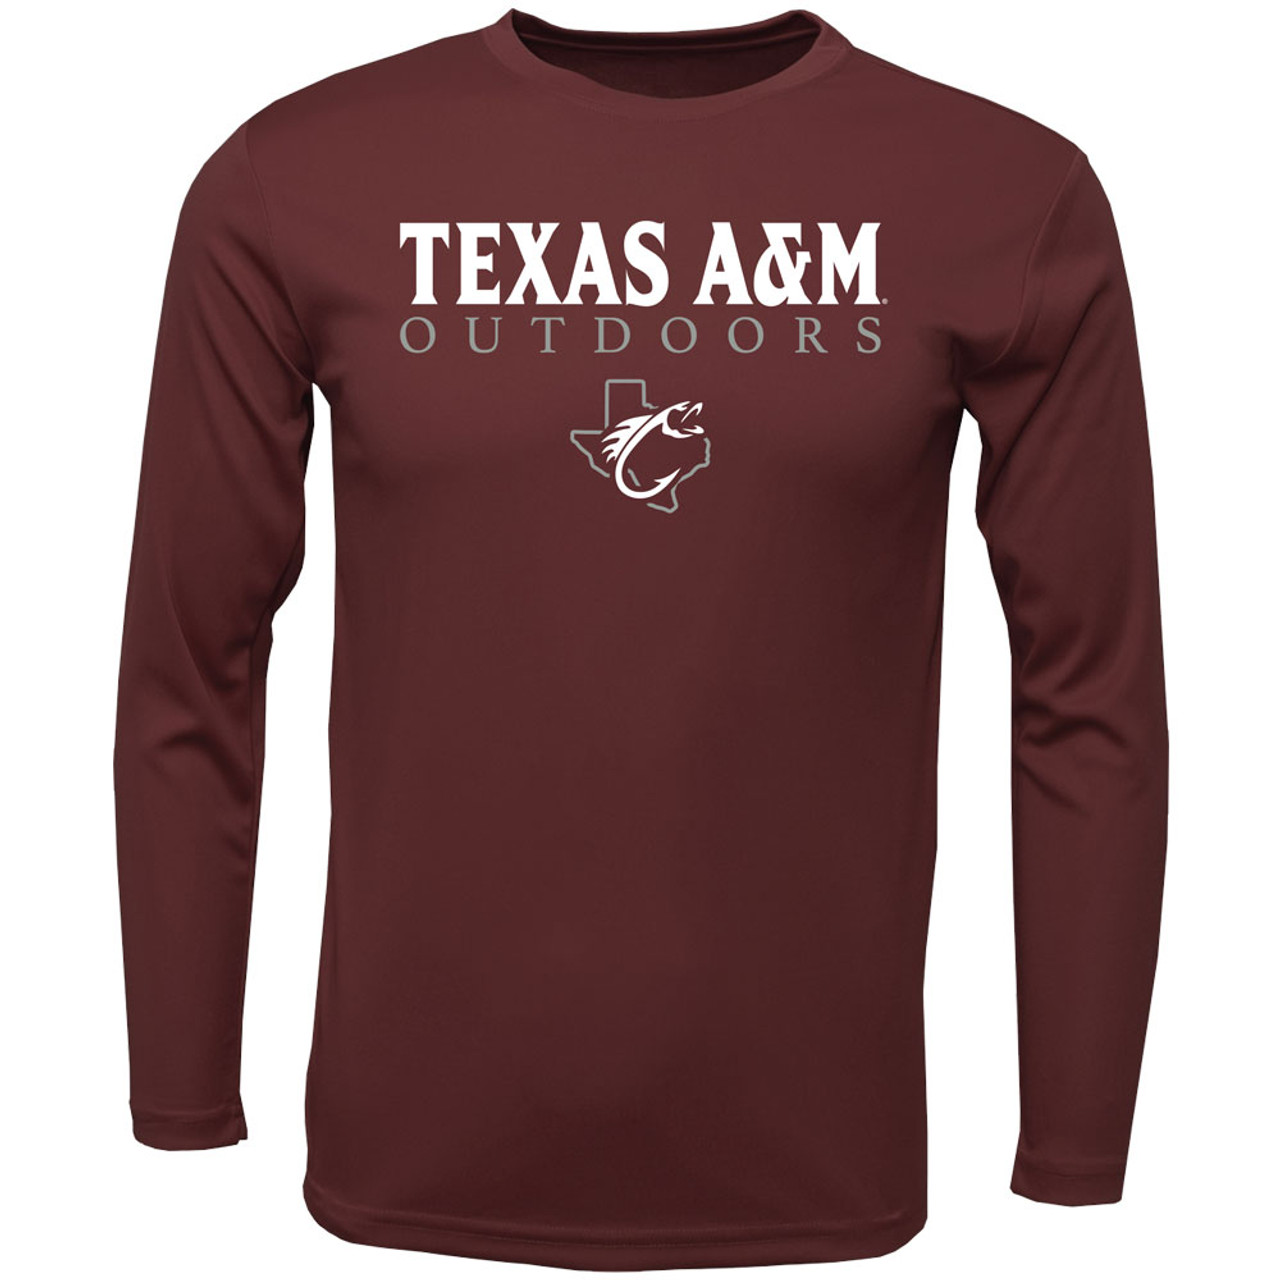 Texas A&M Aggies Outdoor Active Long Sleeve T-Shirt